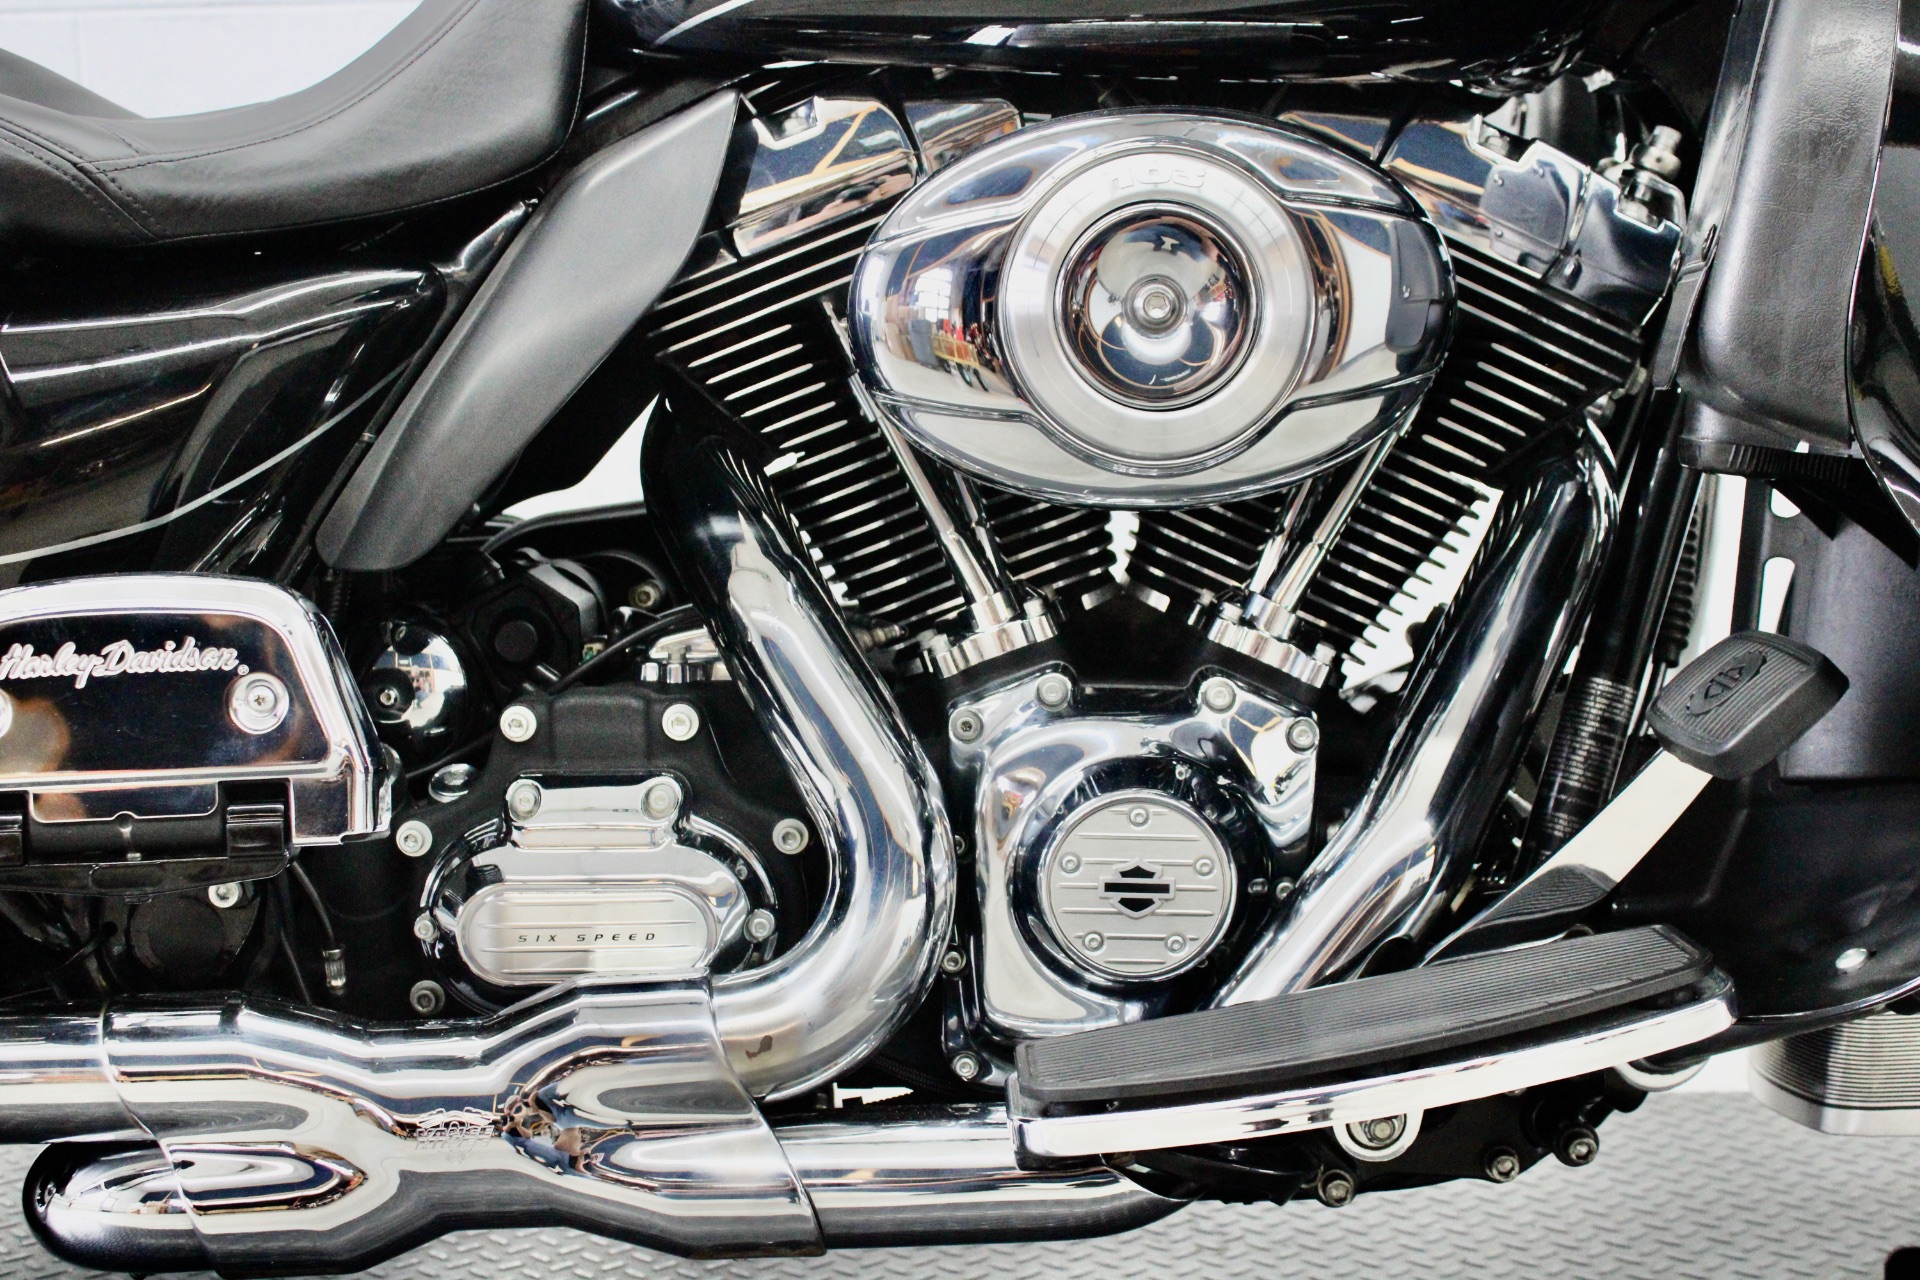 2012 Harley-Davidson Electra Glide® Ultra Limited in Fredericksburg, Virginia - Photo 14